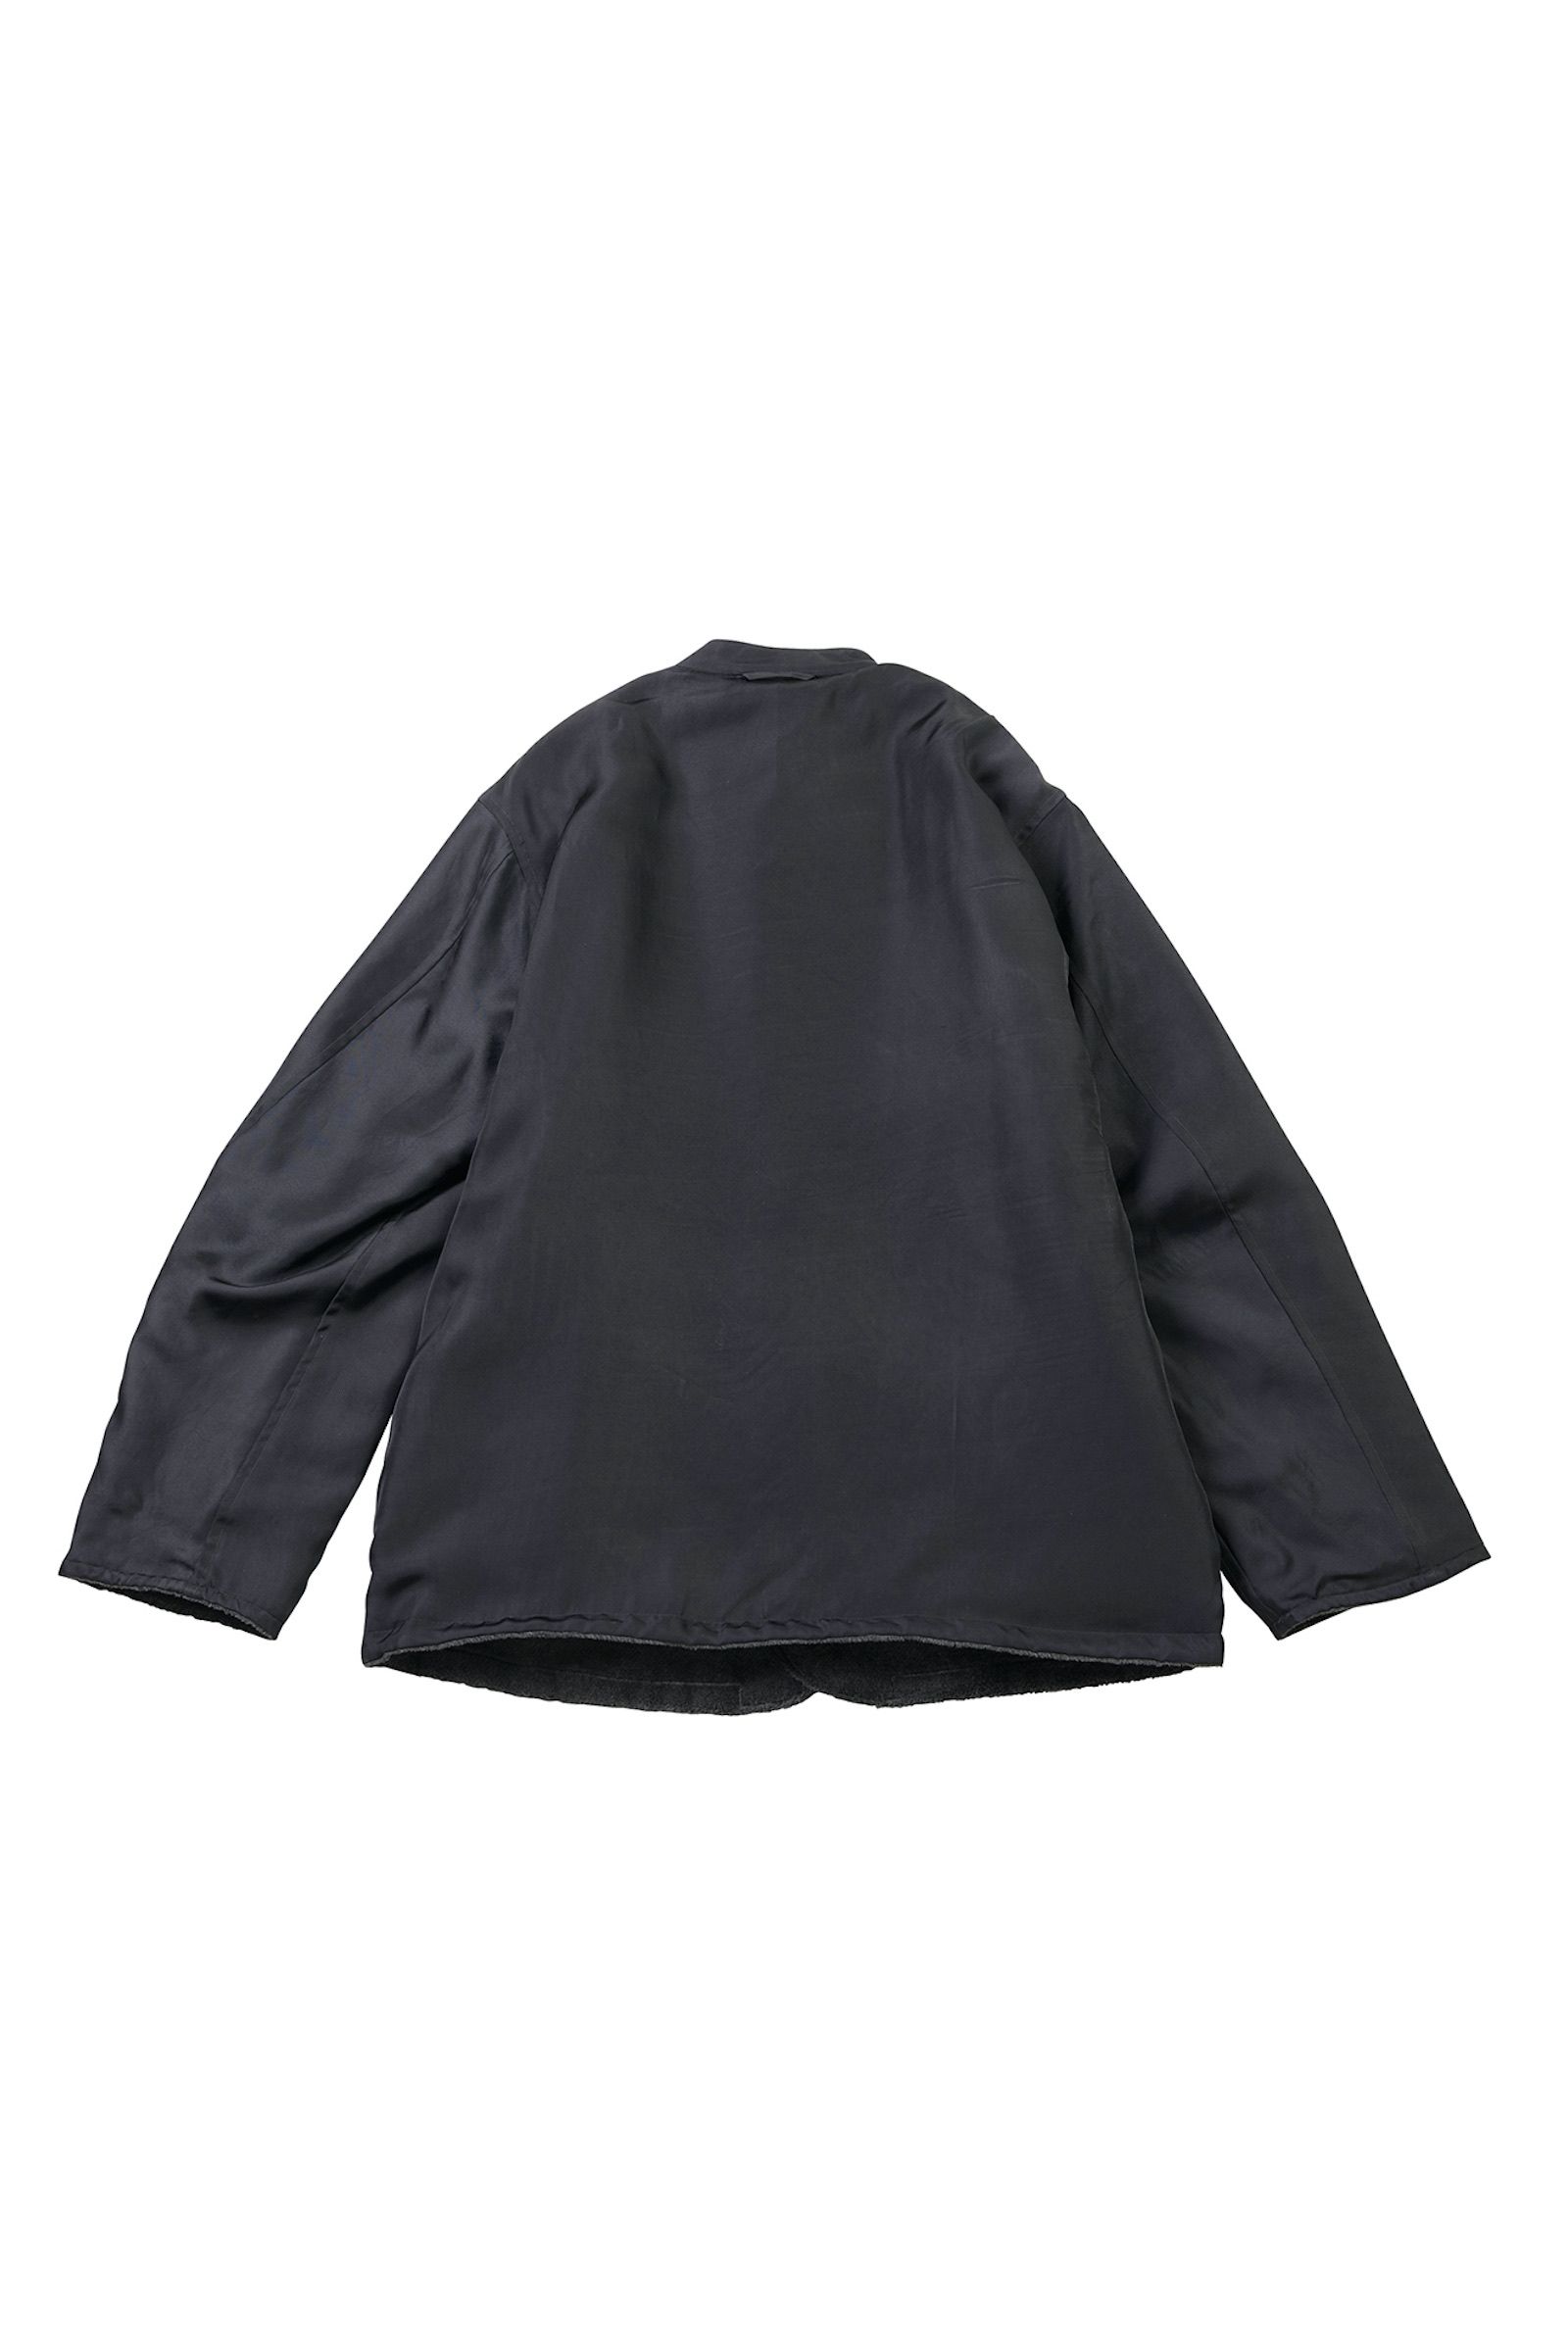 blurhms - cut pile reversible hospital jacket -heather charcoal 